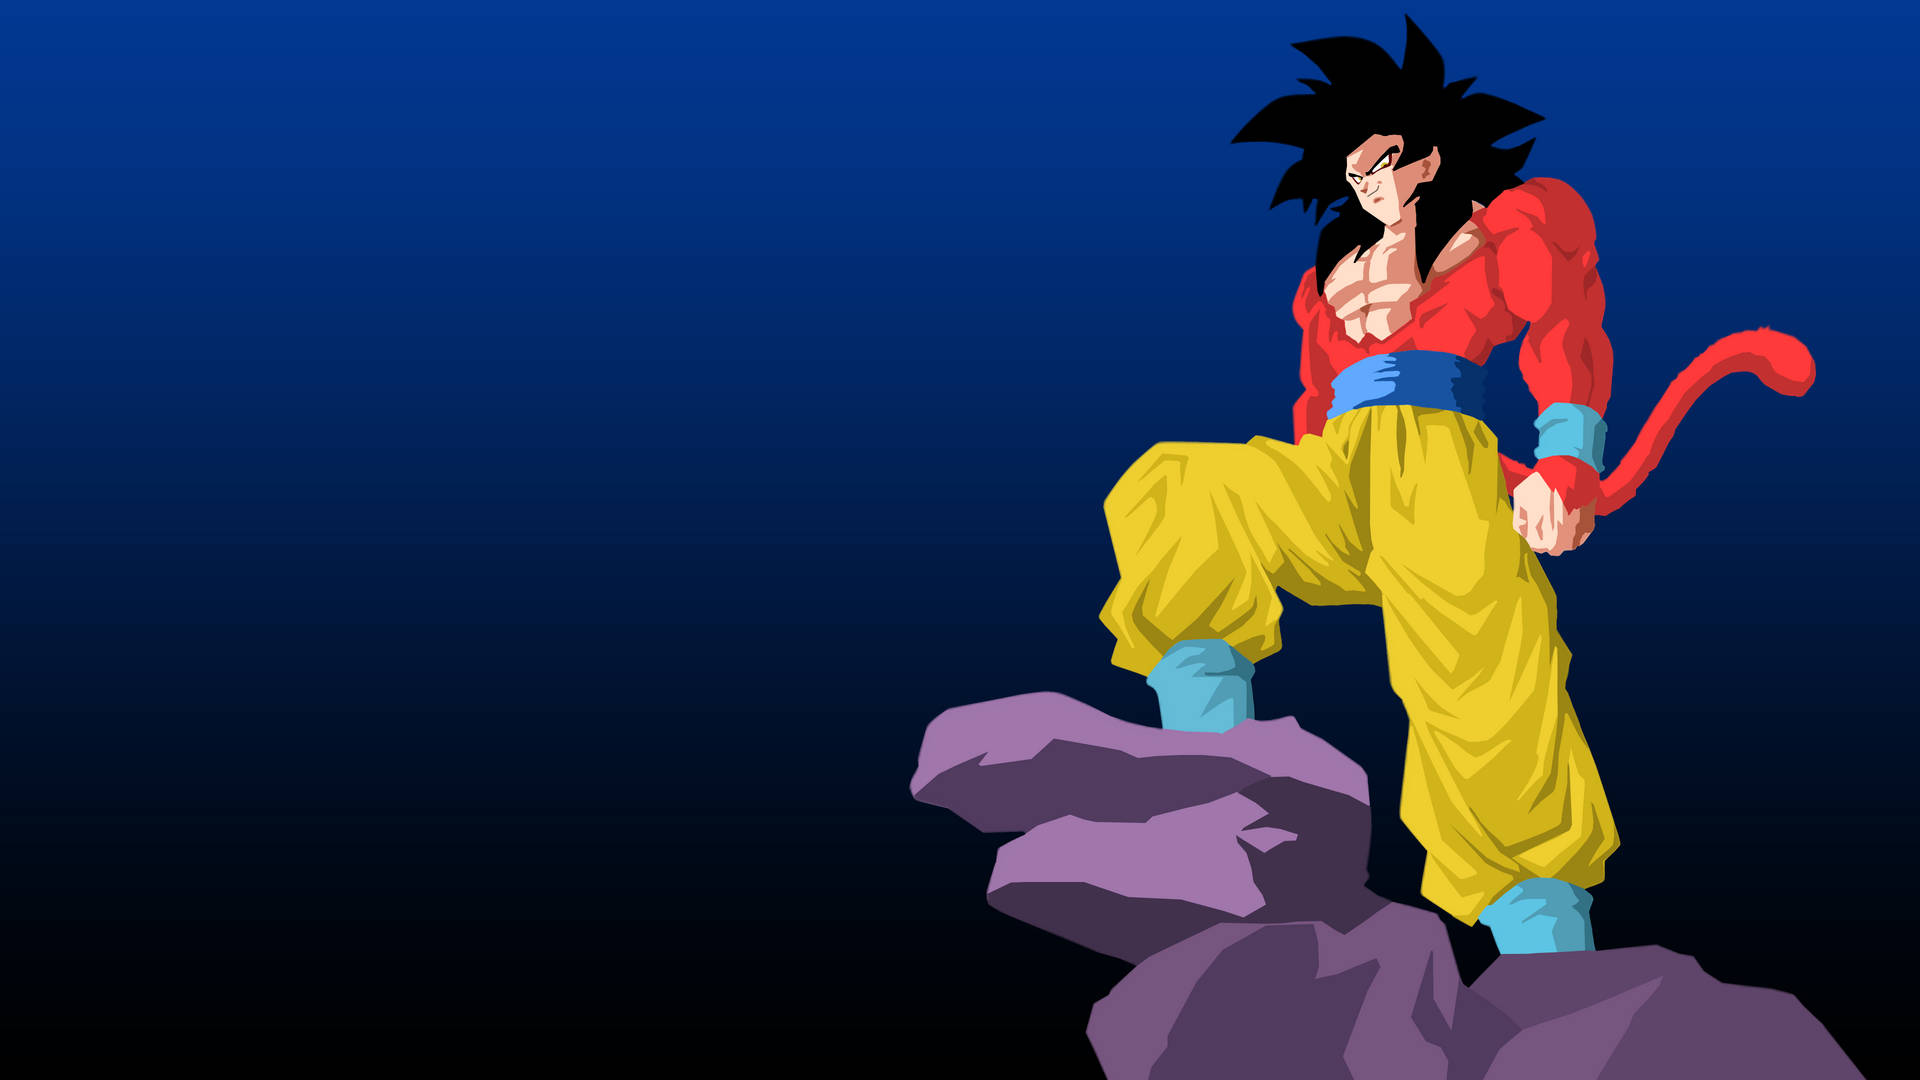 Super Saiyan 4 Goku Dbz 4k Background